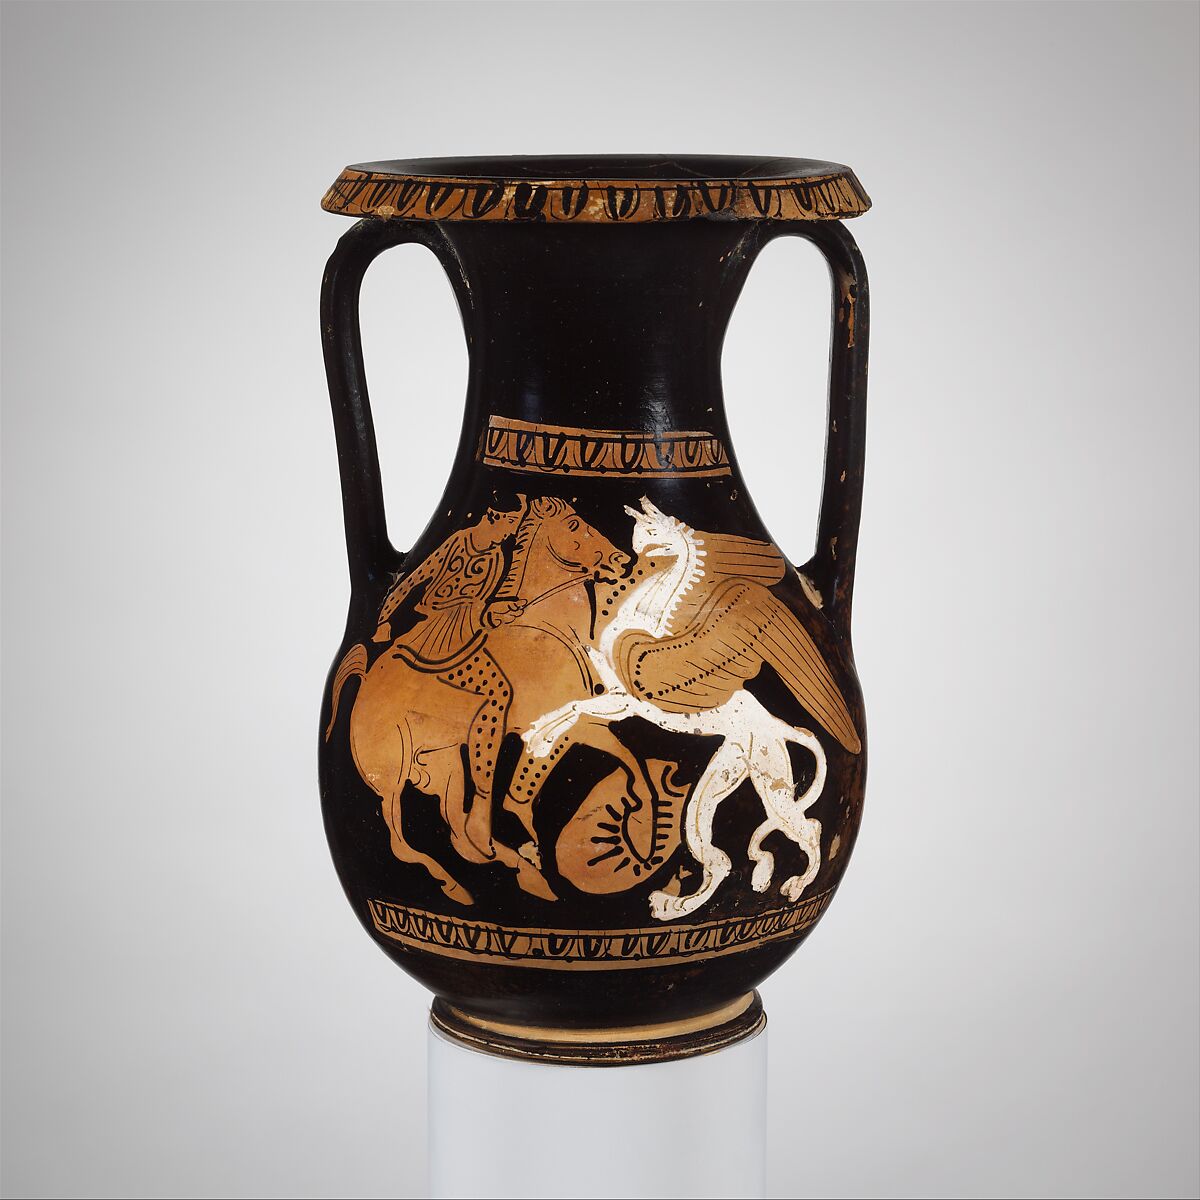 Terracotta pelike (jar), Attributed to Group G, Terracotta, Greek, Attic 